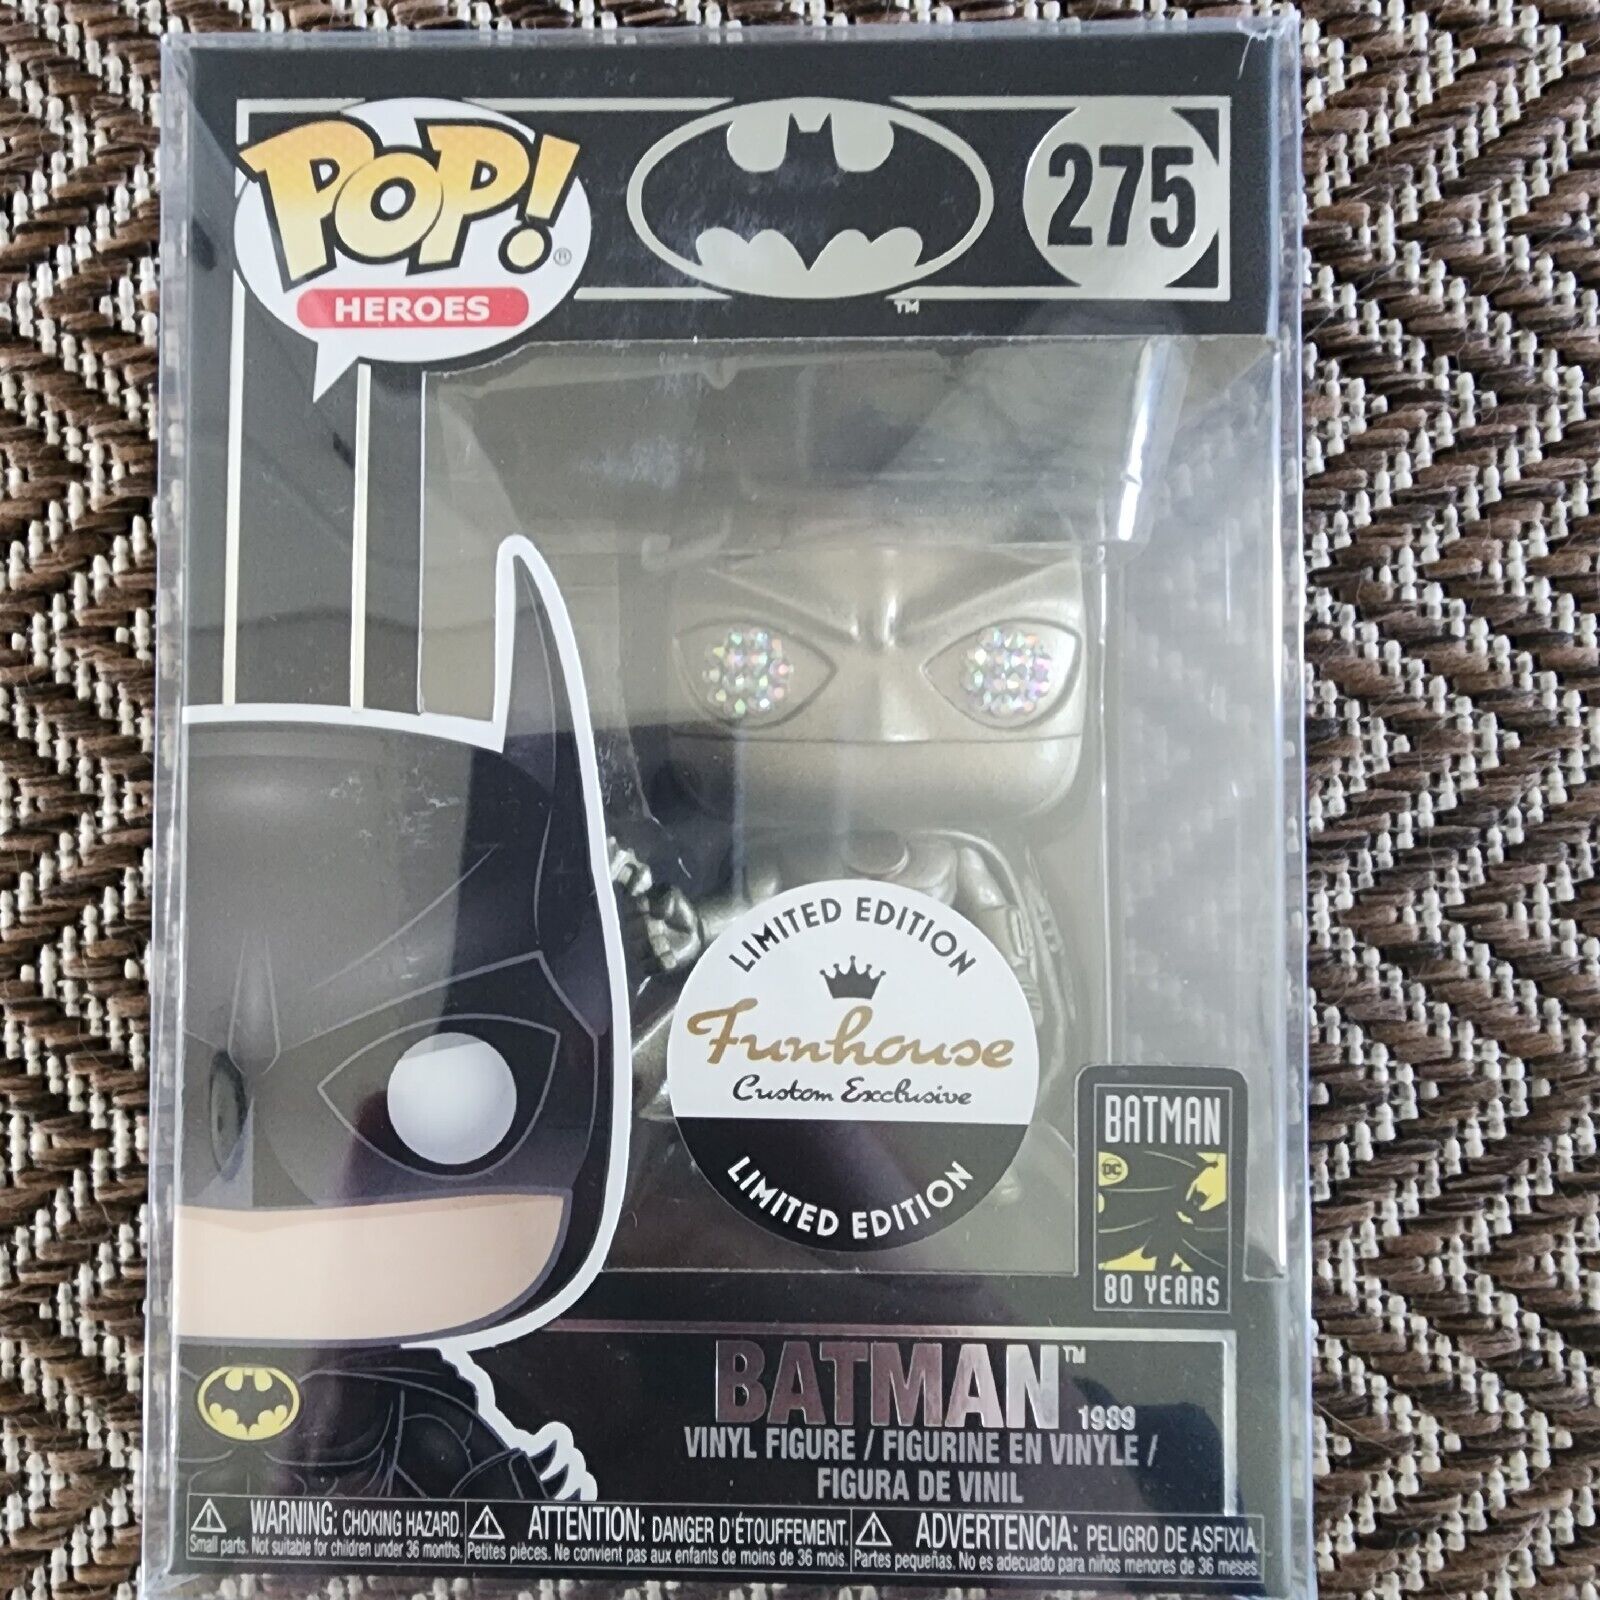 DC Heroes Batman 1989 Funko Pop Vinyl Figure #275 Funhouse Custom Exclusive 